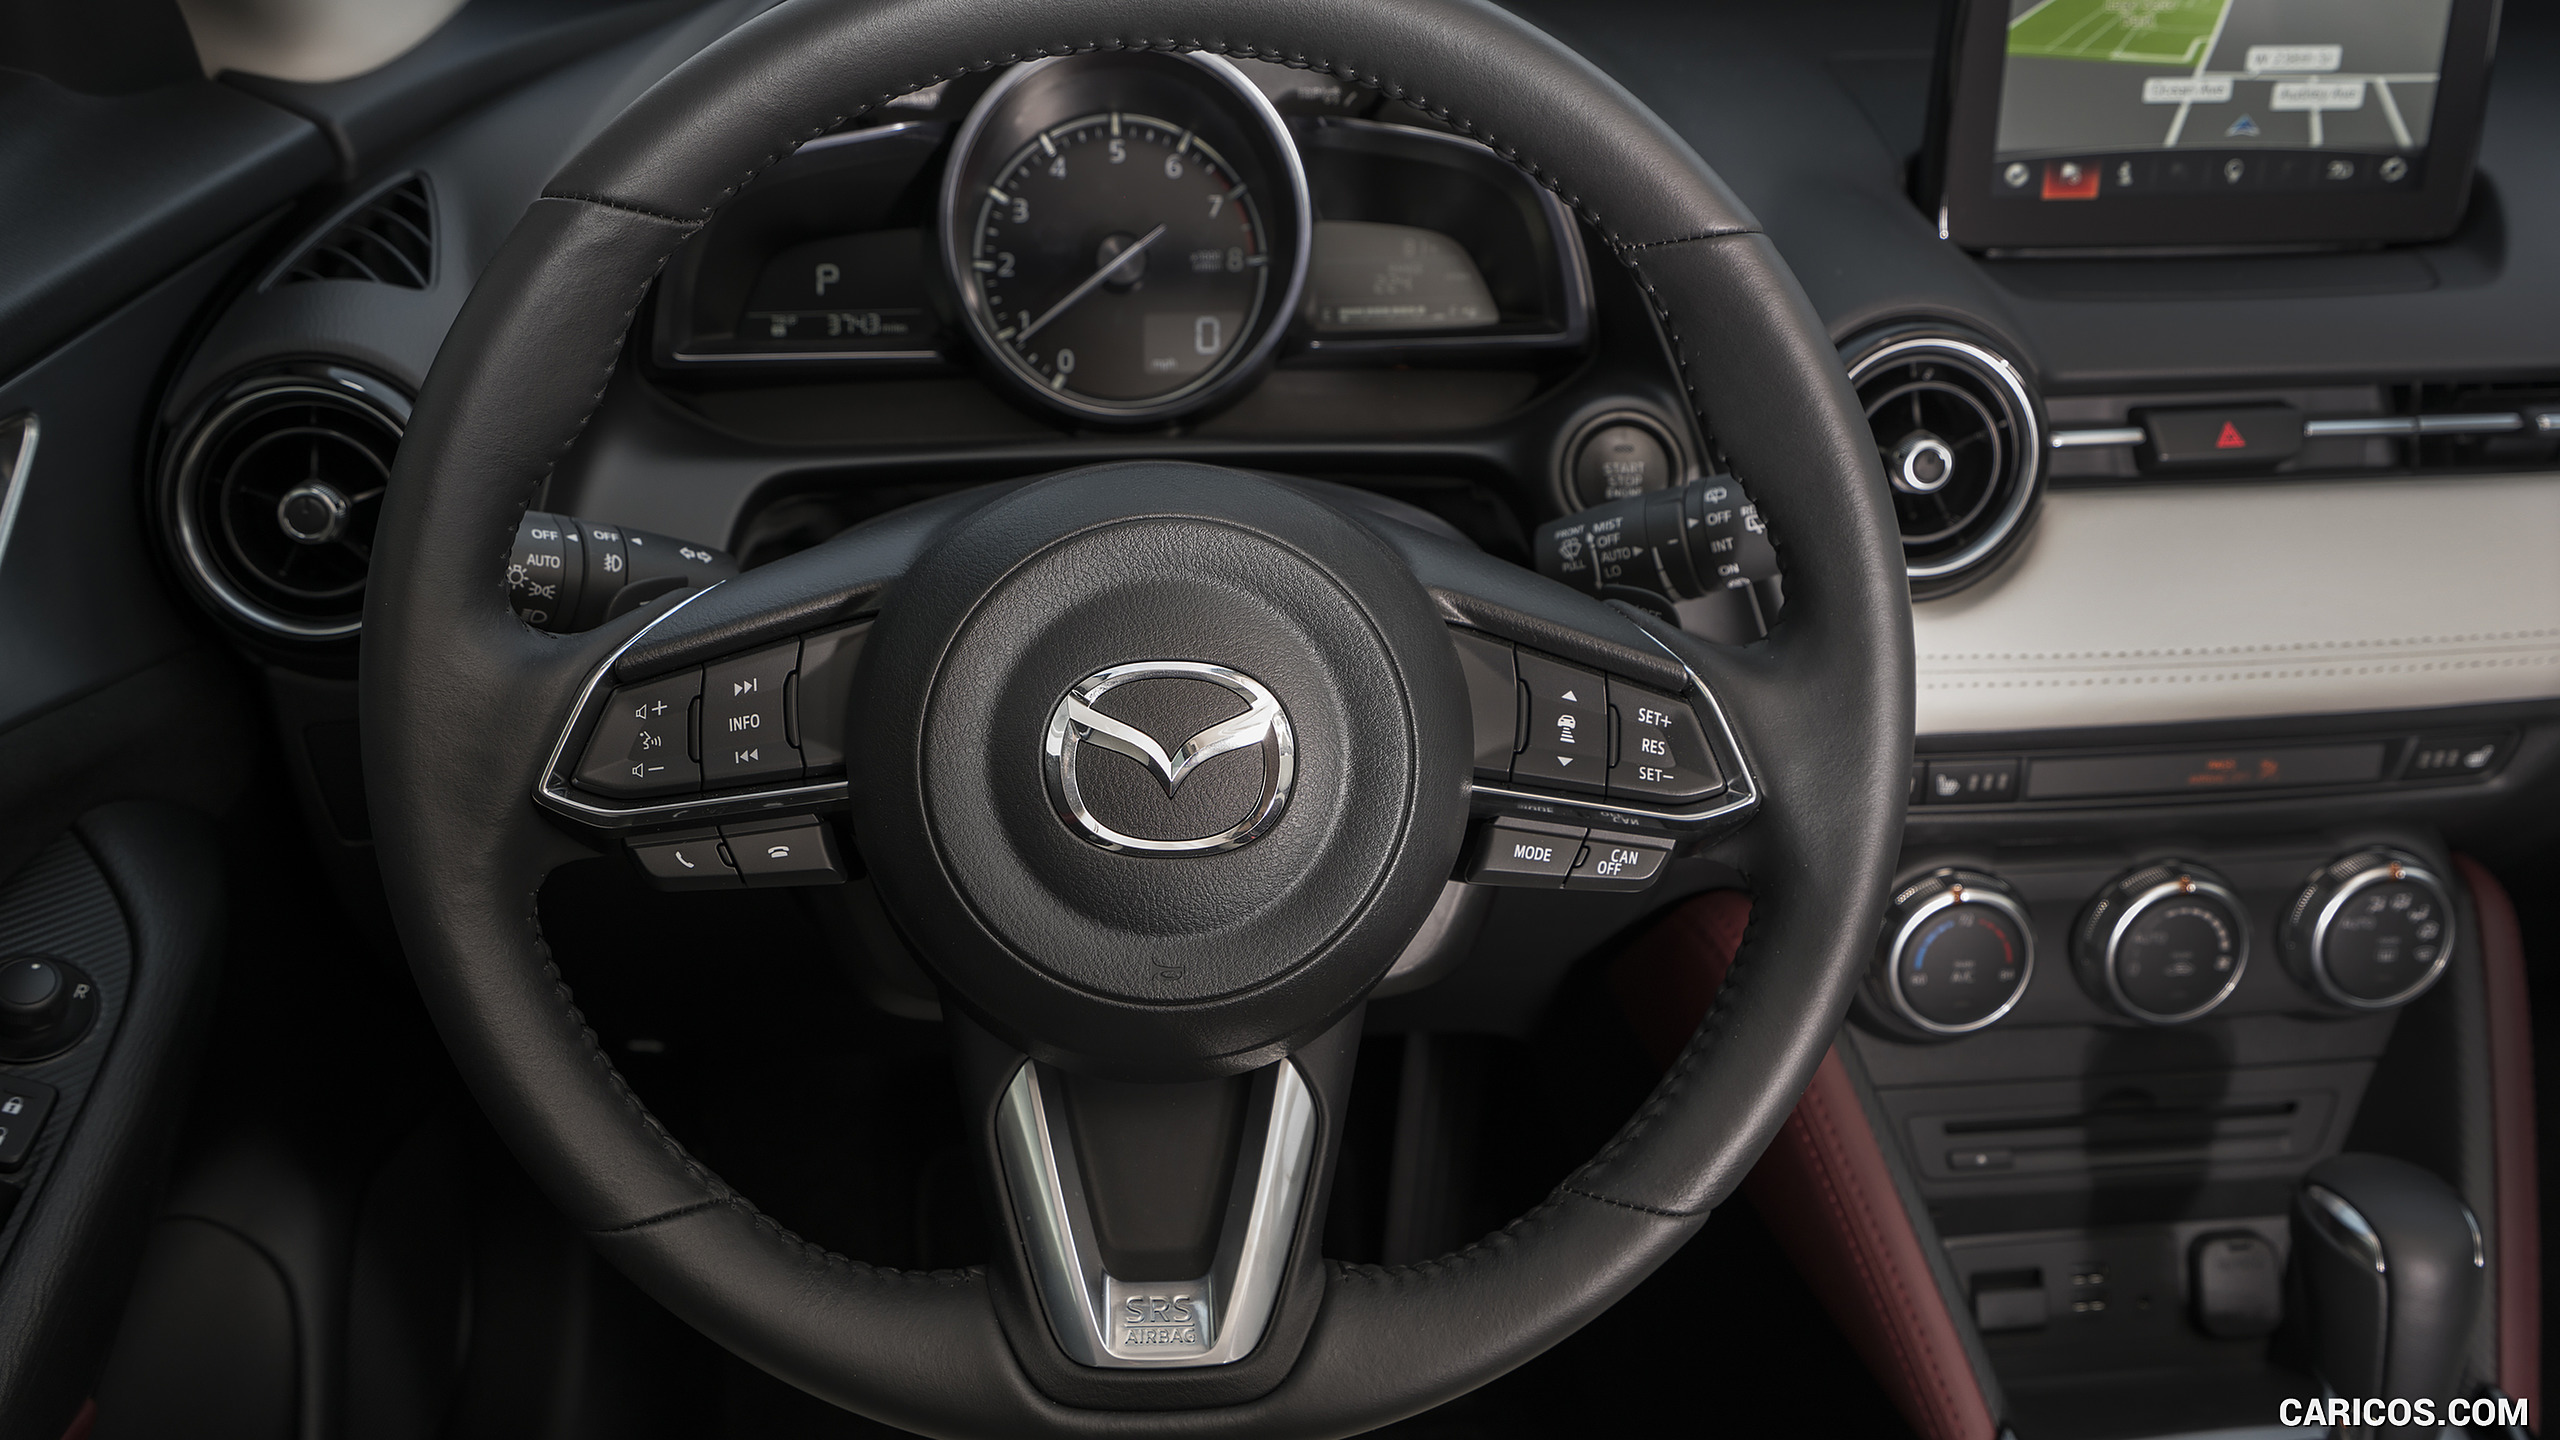 2018 Mazda CX-3 - Interior, Steering Wheel, #4 of 5